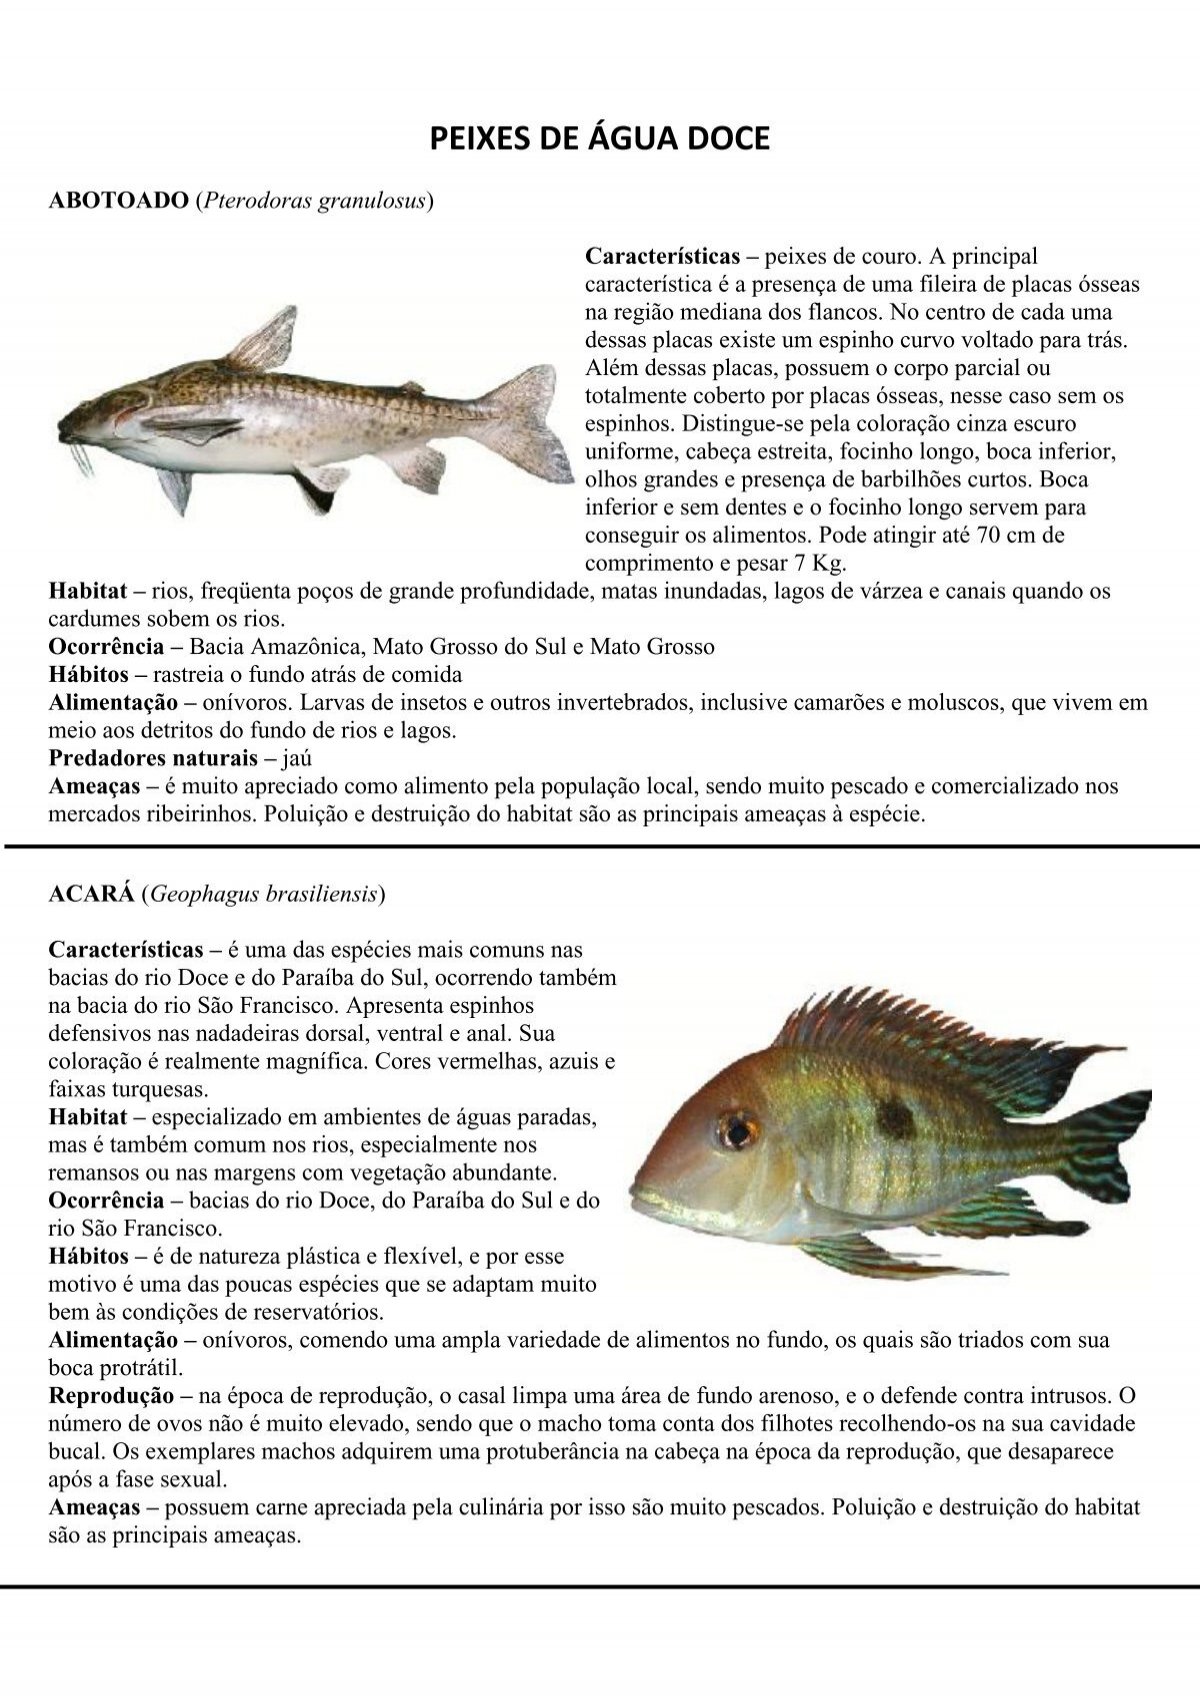 Peixes de água doce do Brasil - Mussum (Synbranchus marmoratus